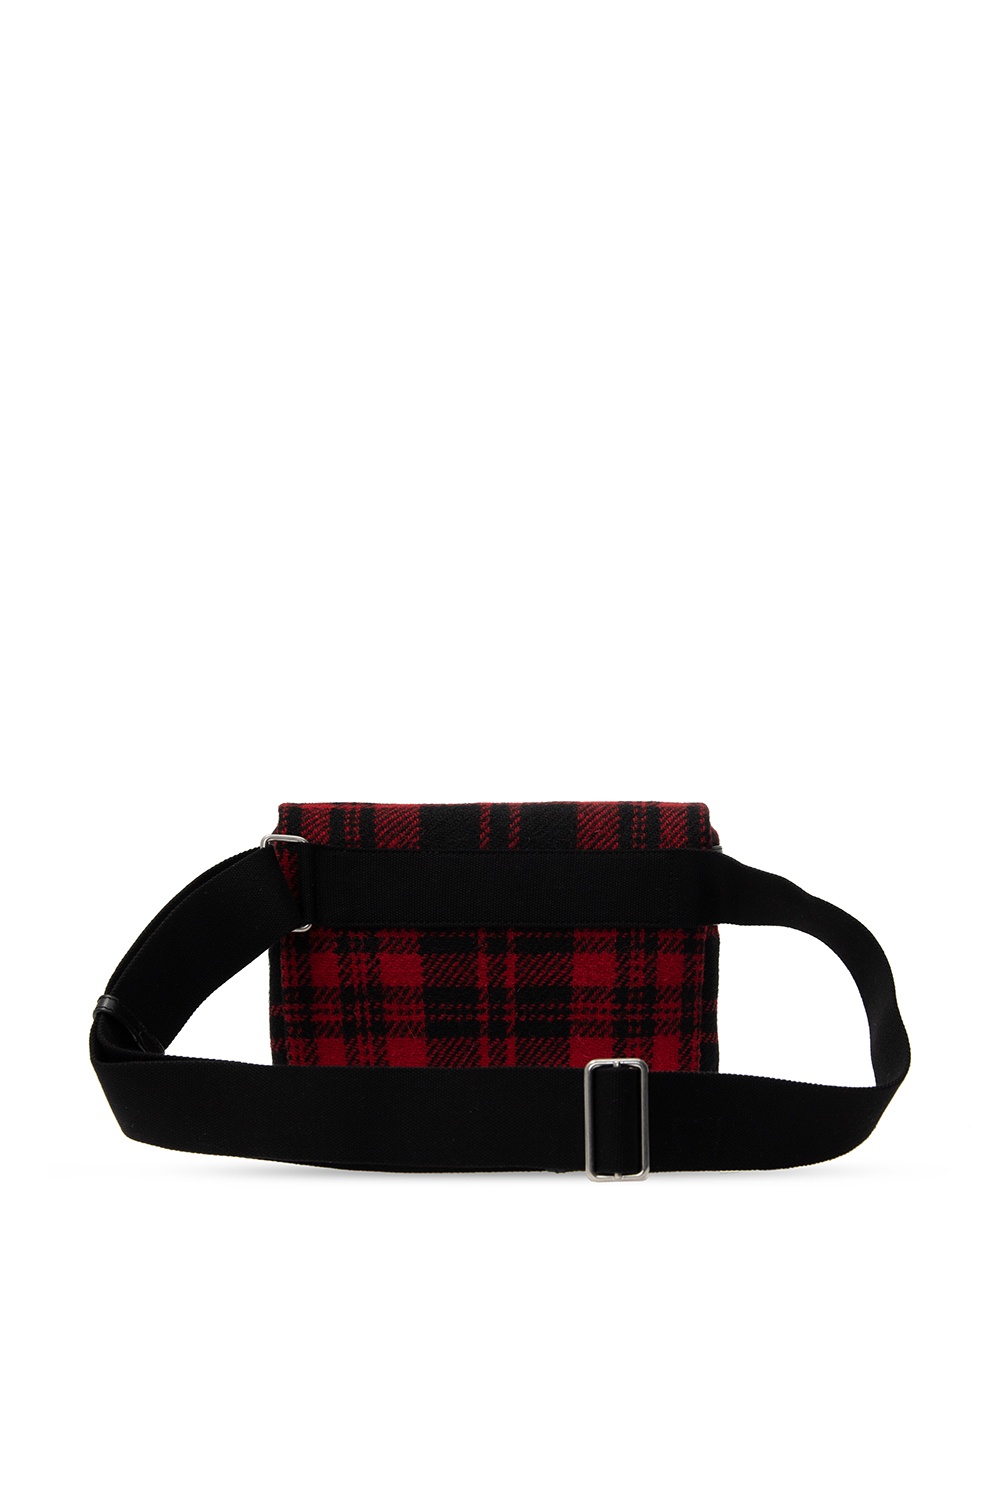 Saint Laurent ‘City’ belt bag